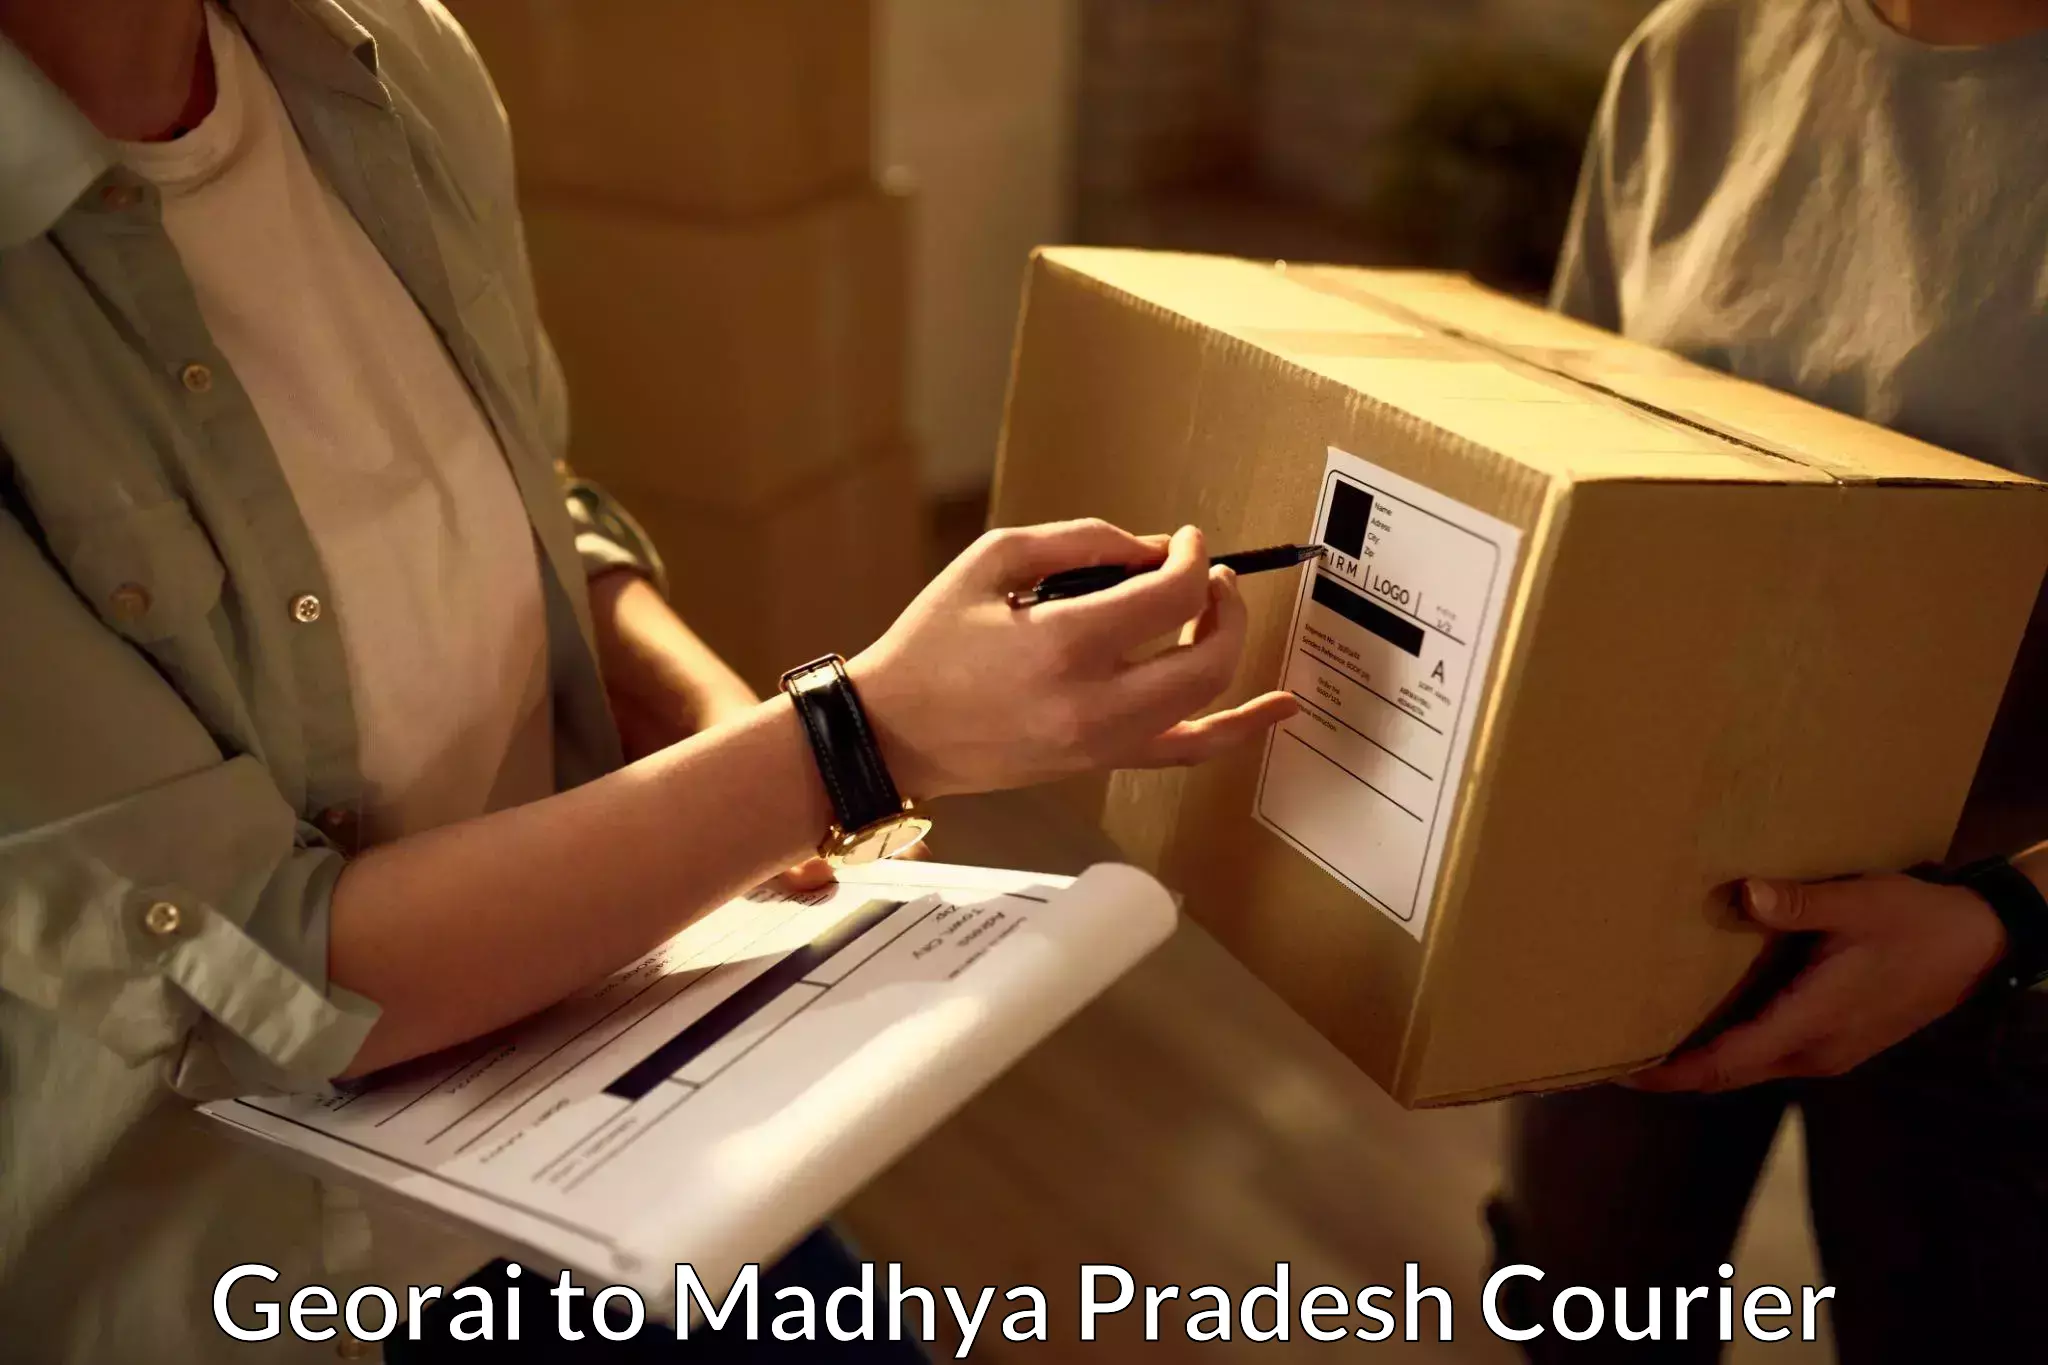 On-call courier service Georai to Vidisha